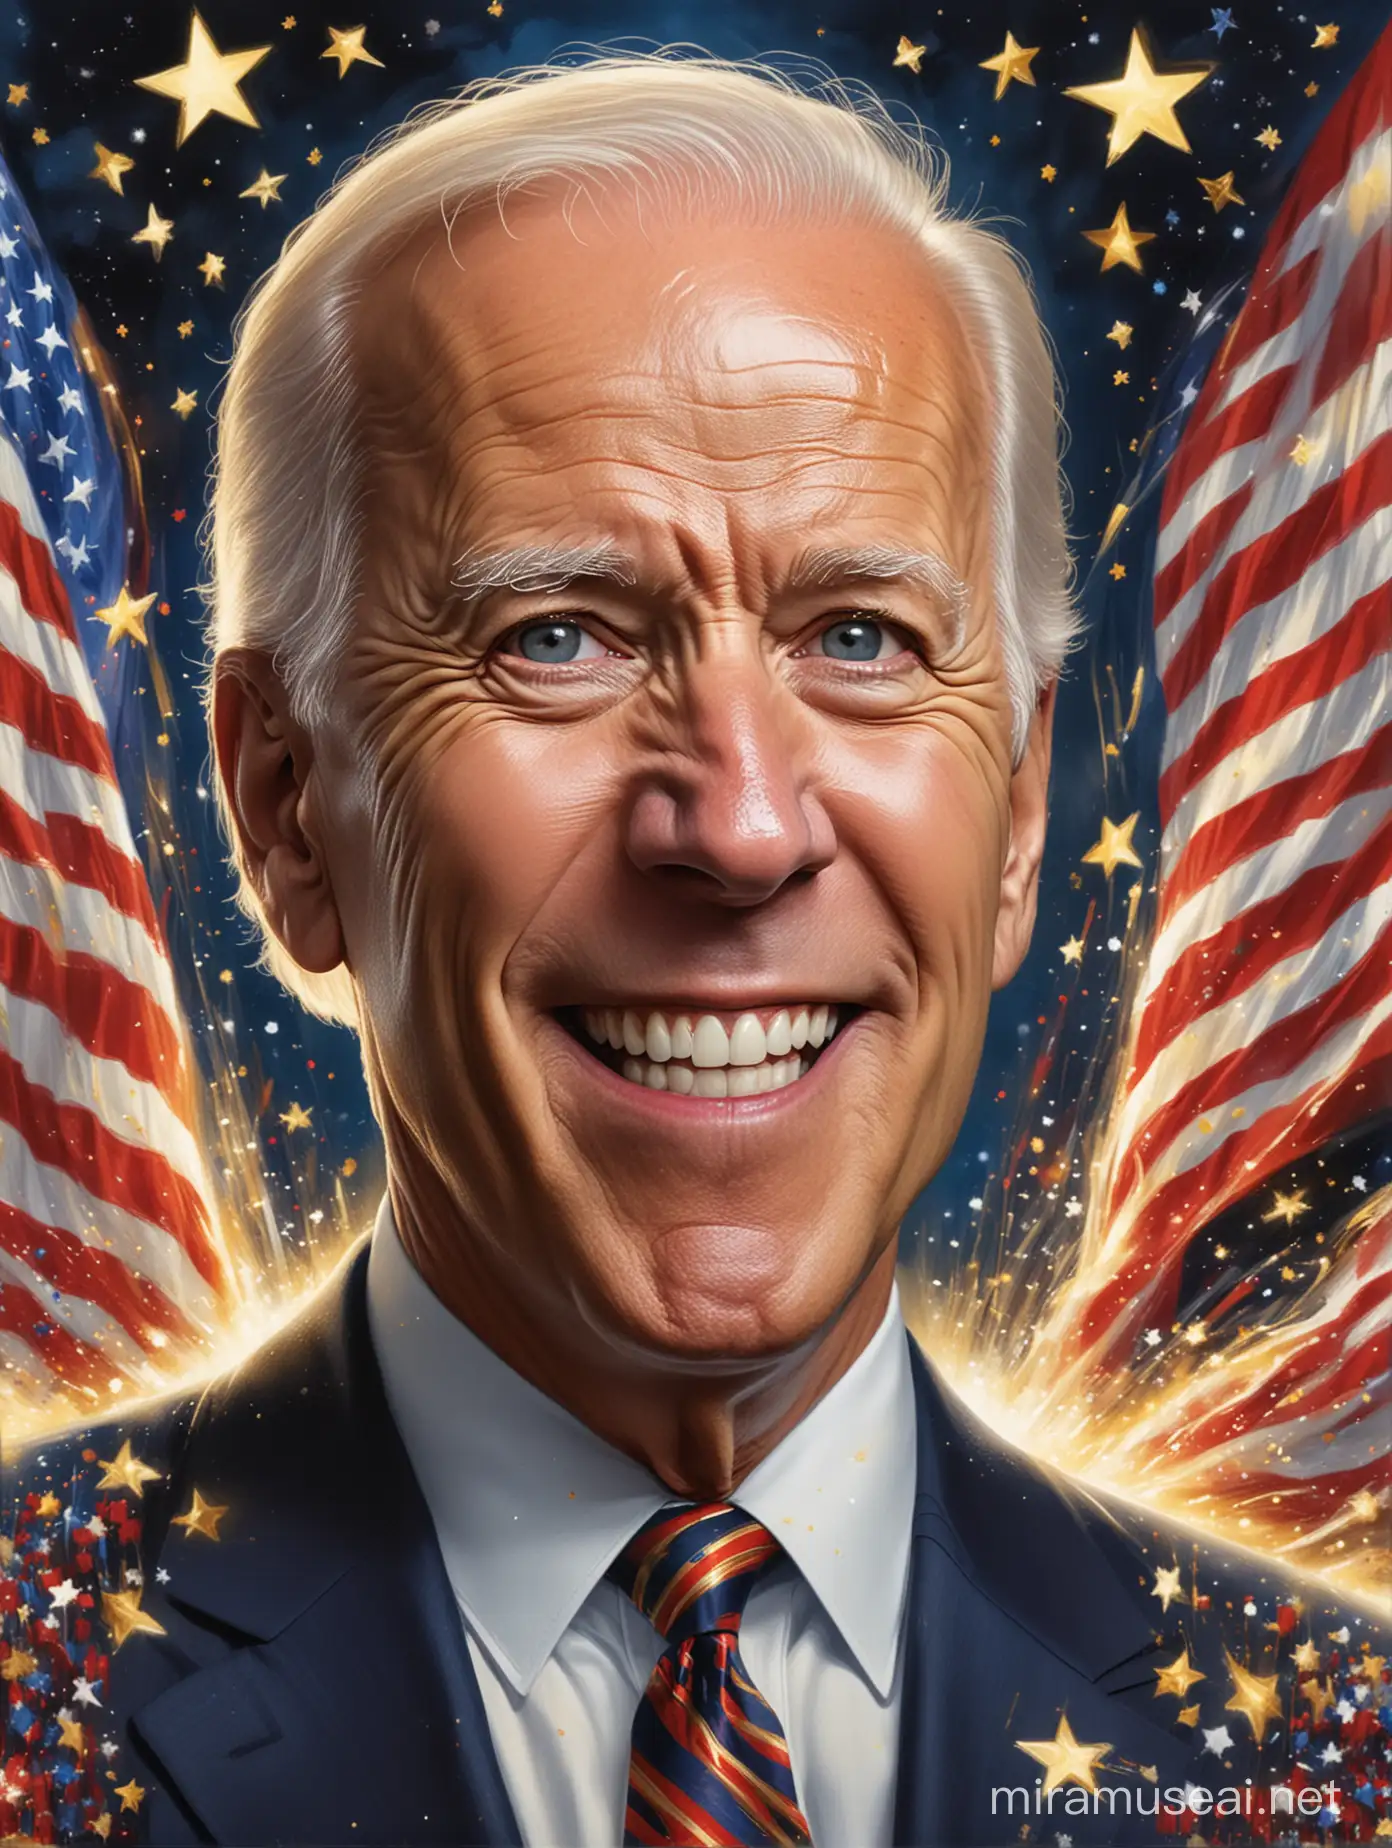 Glorious President Joe Biden in Patriotic Golden Presidency